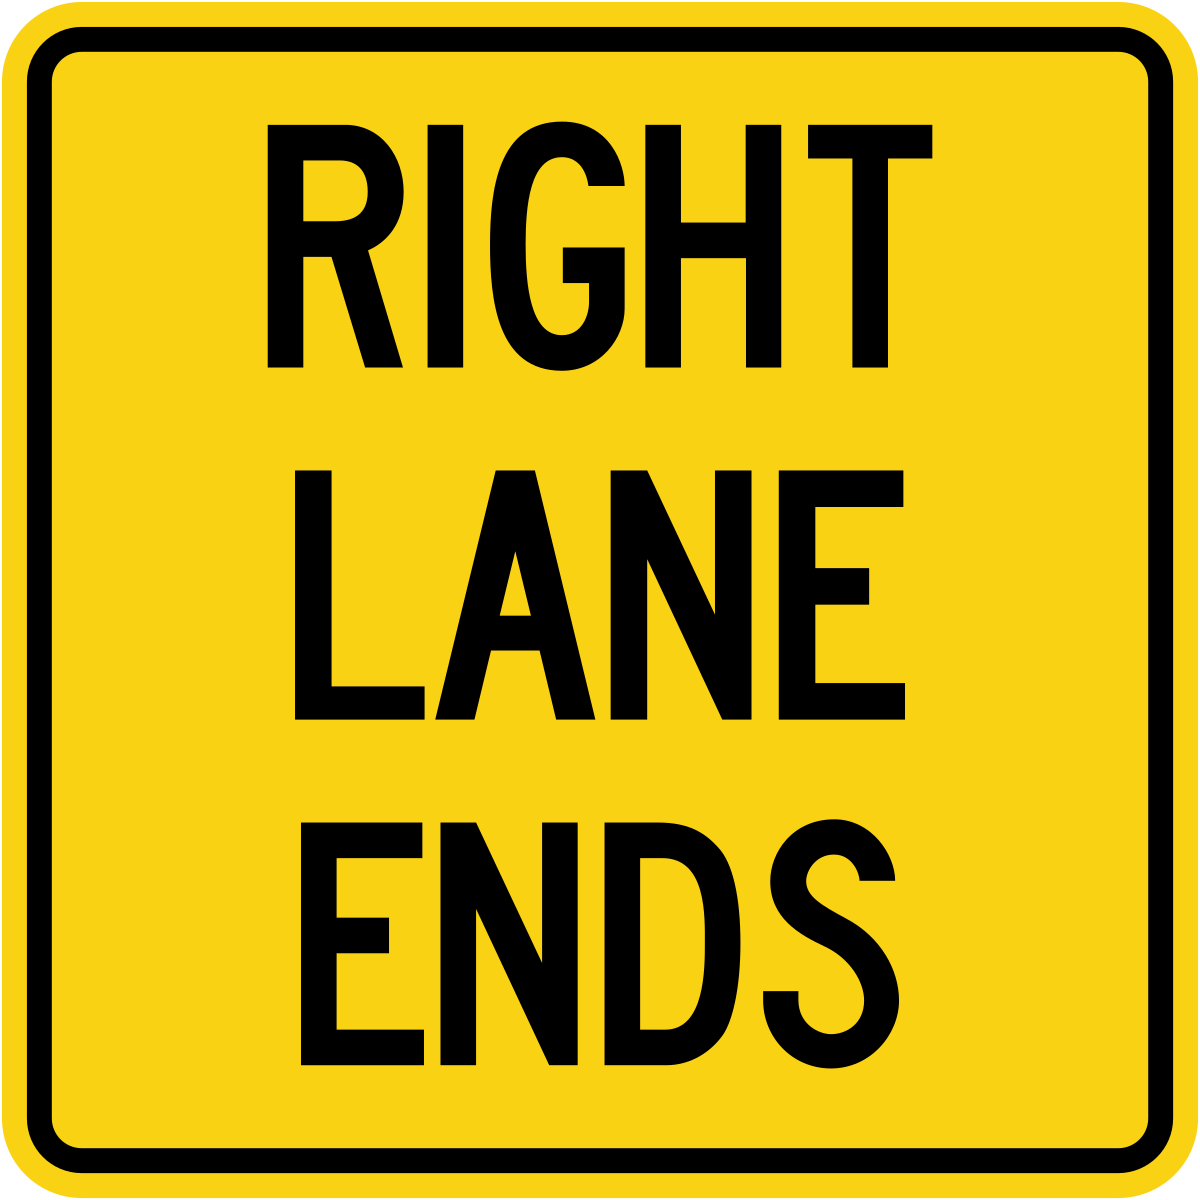 Right Lane ends. Wa23. Lane ends left sign. Maximum sign.